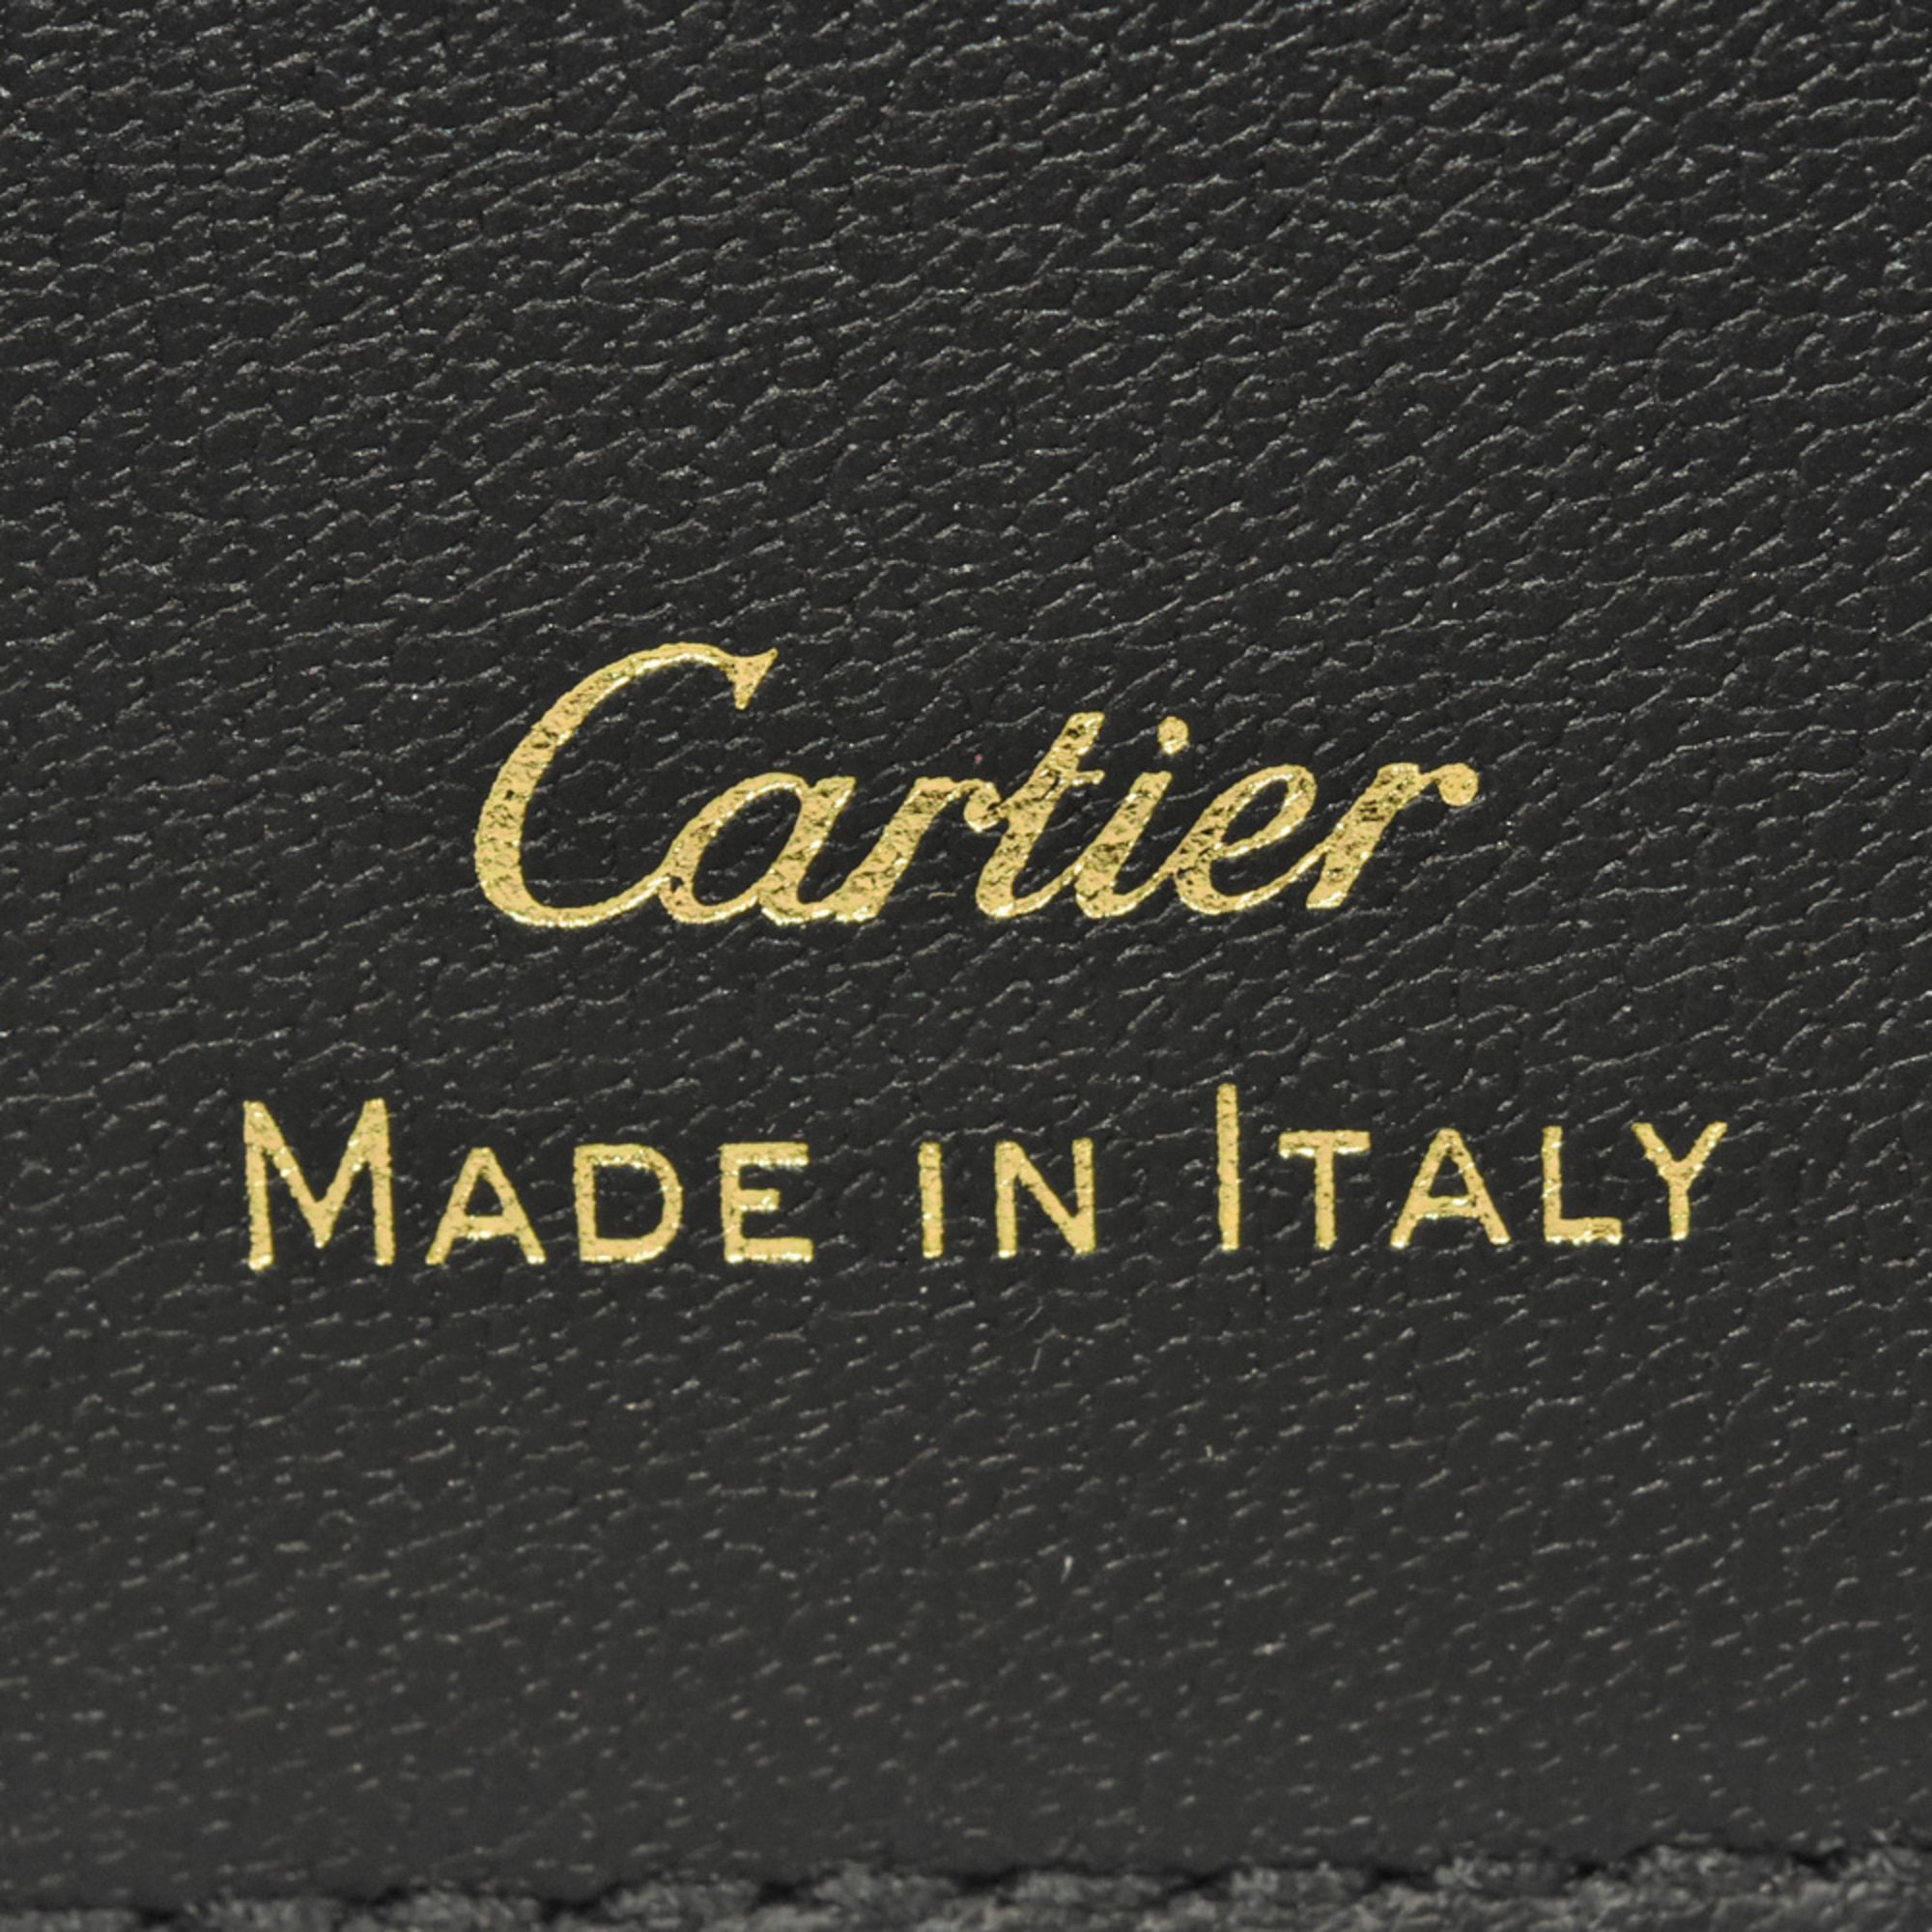 Cartier Garland de Small Multi-Wallet Bi-Fold Leather Green